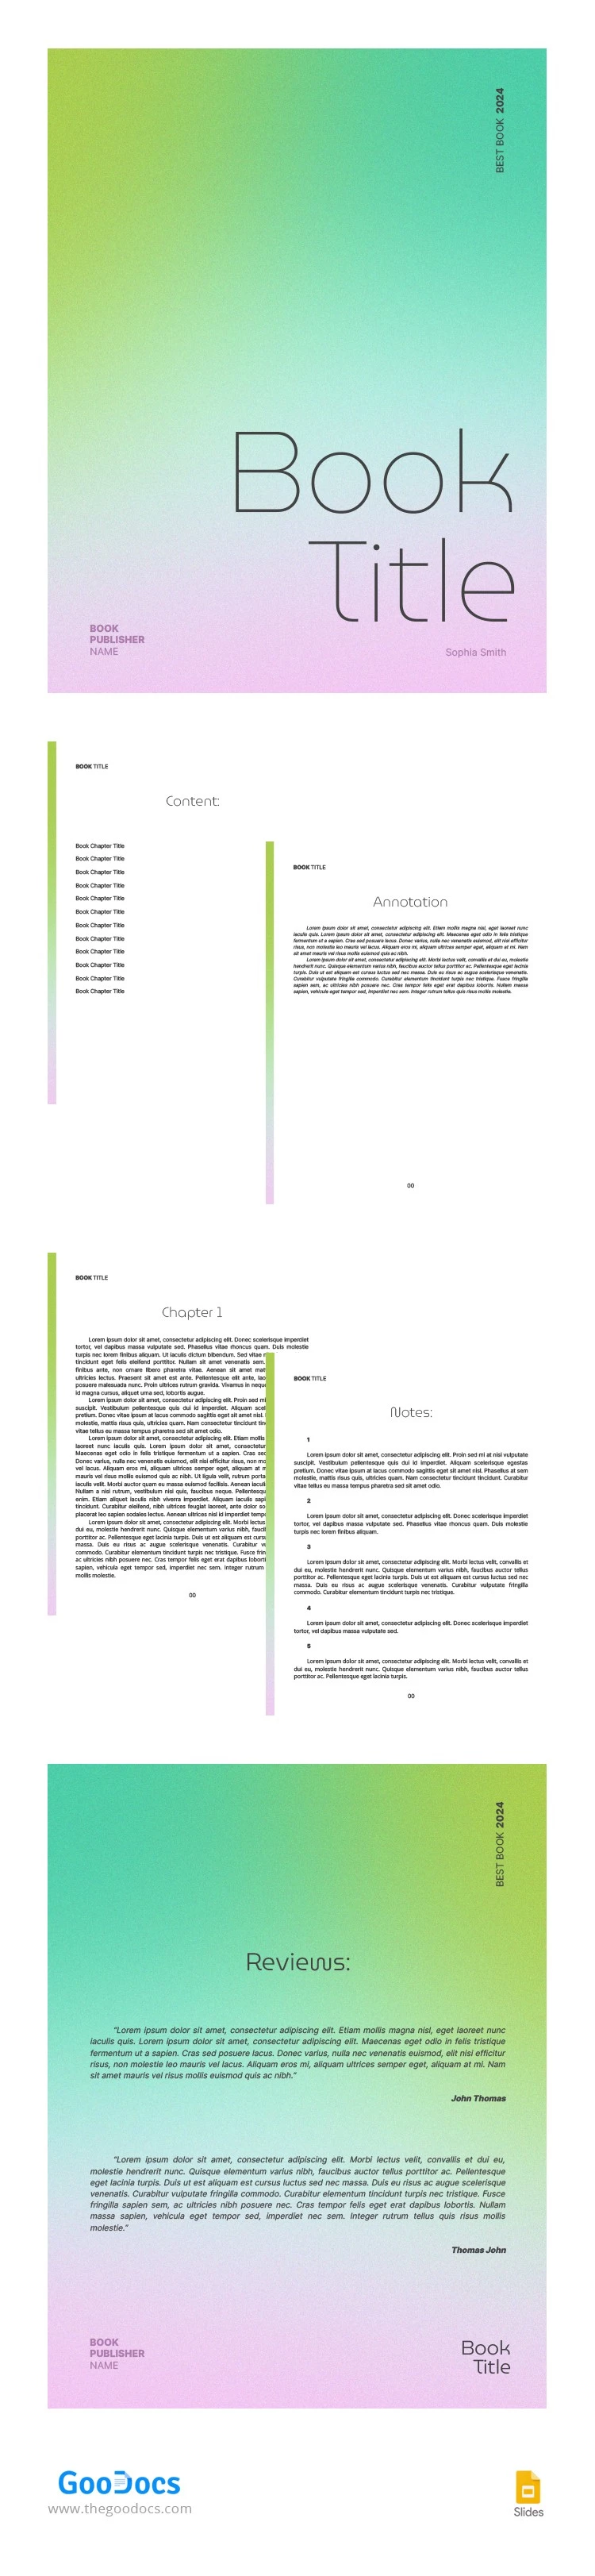 E-book Minimalista a Gradiente - free Google Docs Template - 10066183